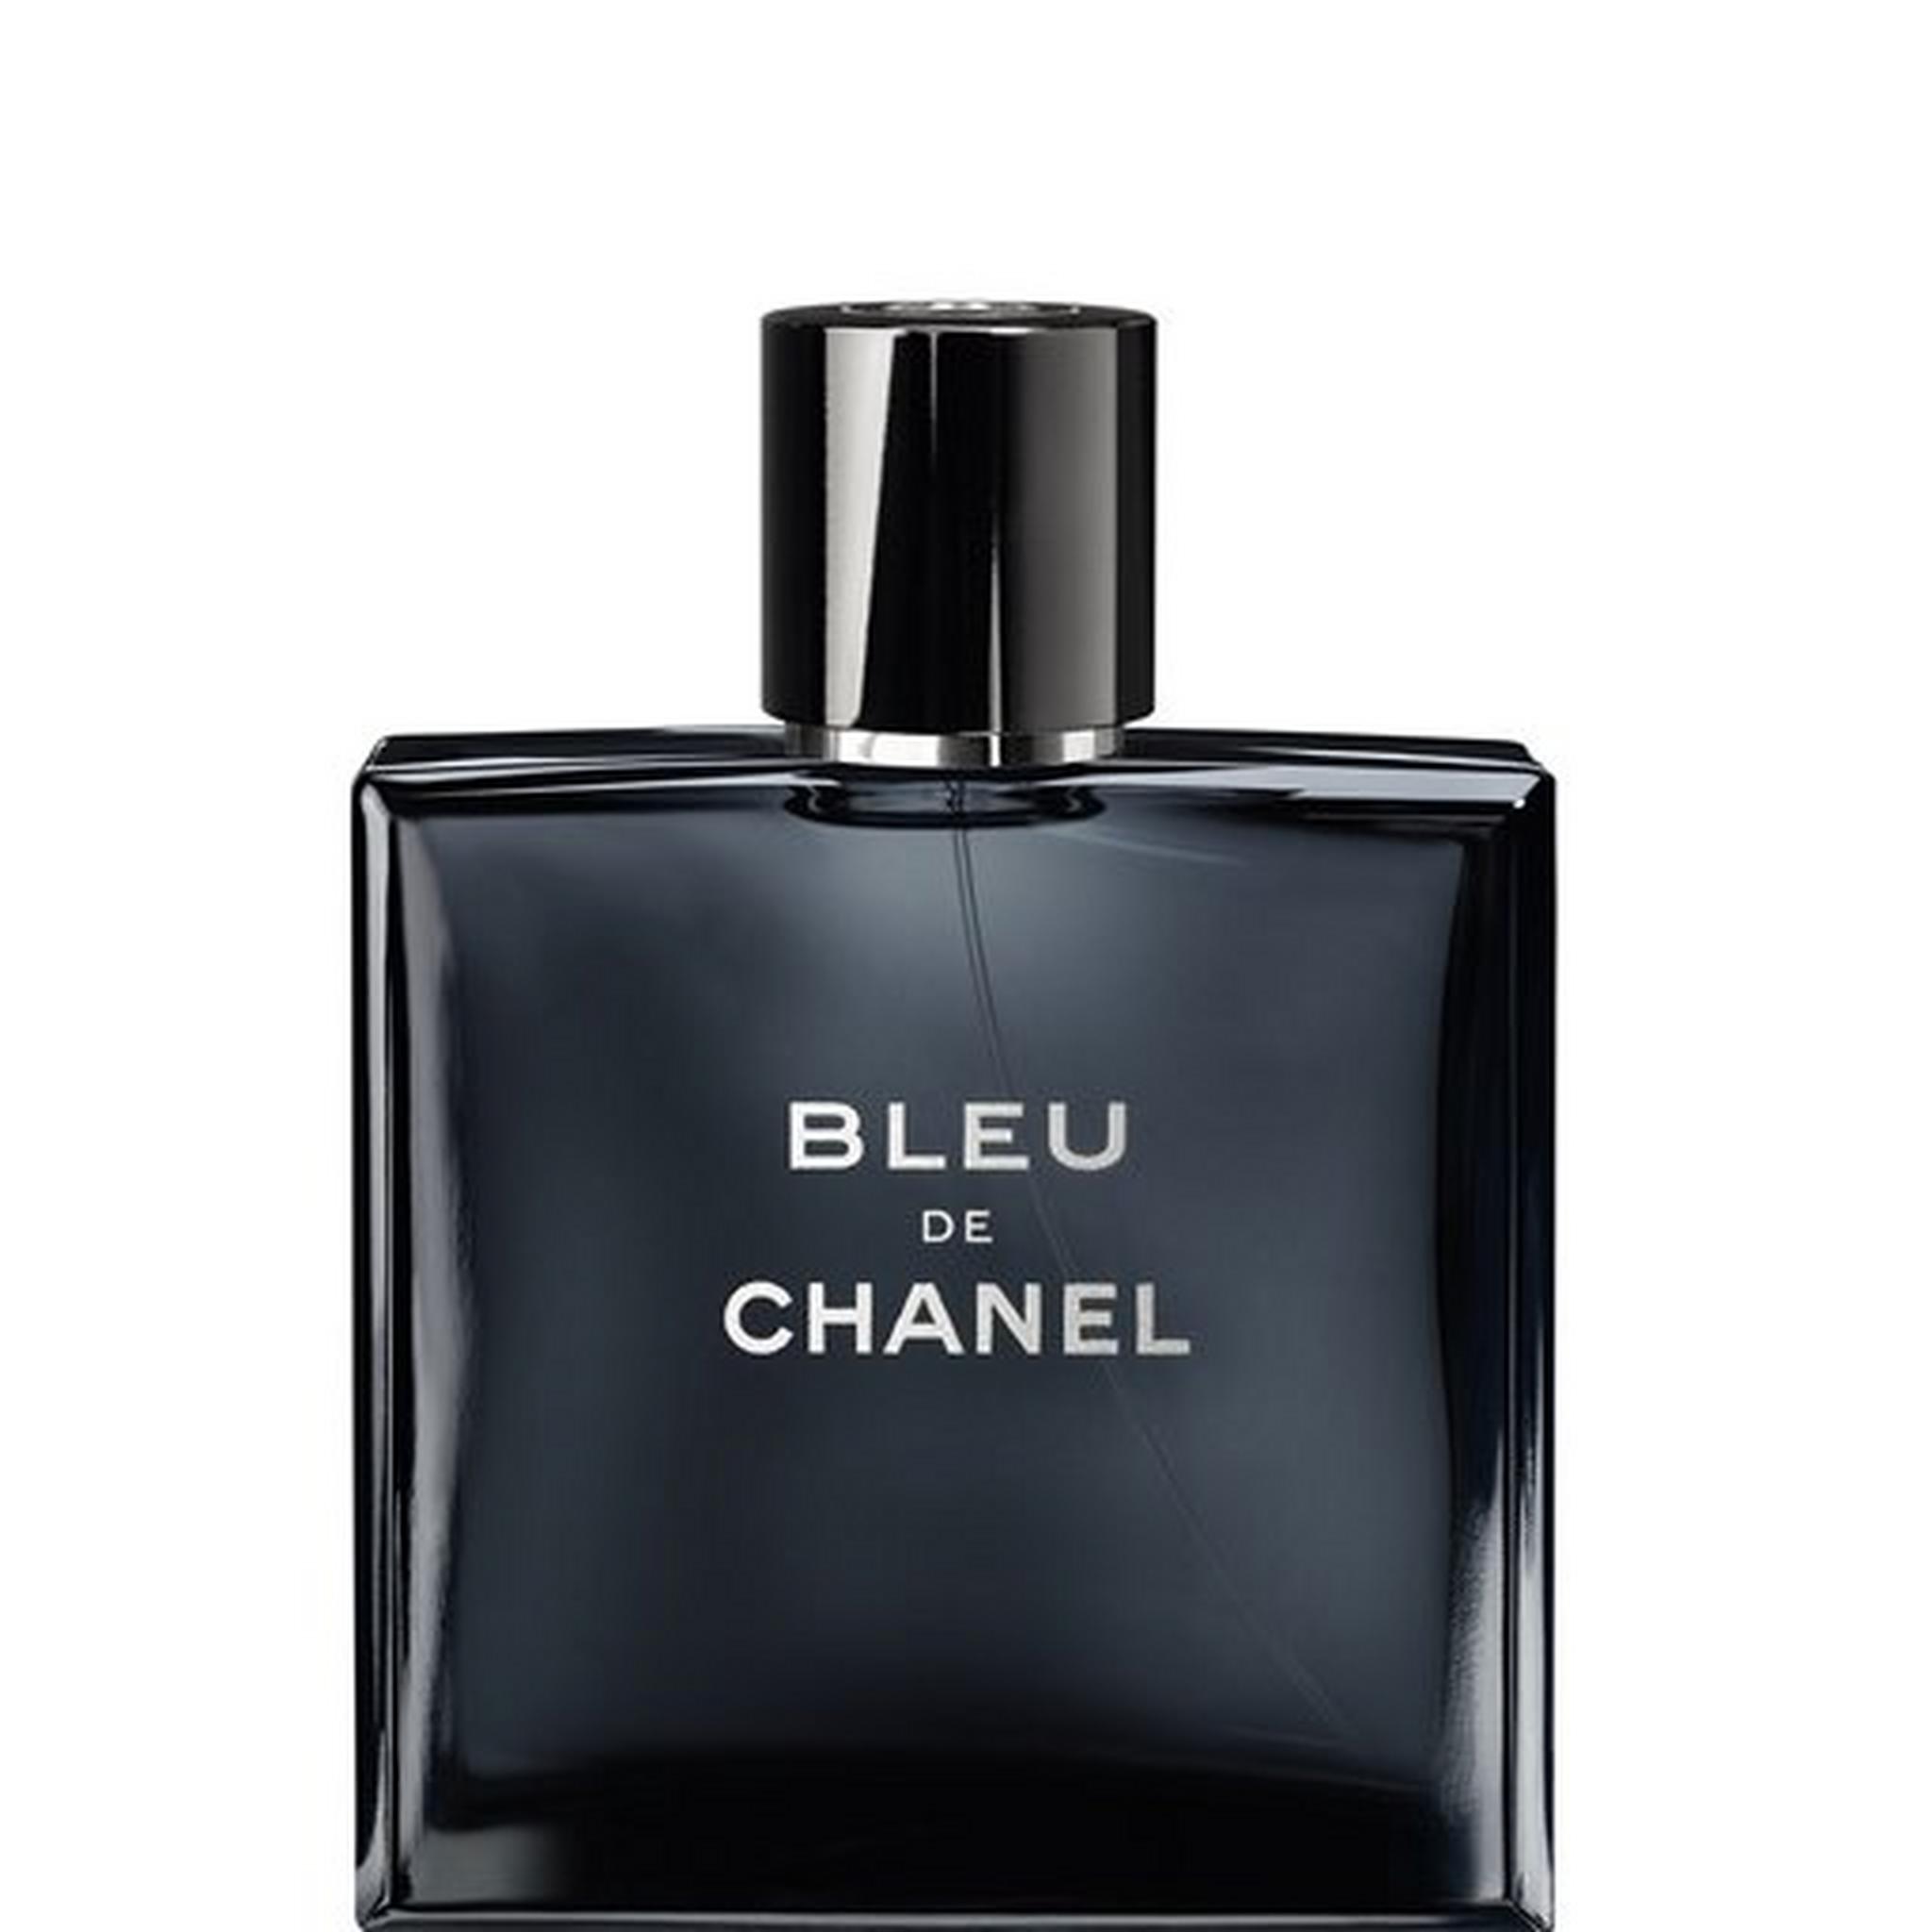 Blue de Chanel by Chanel for Men 100 ml Eau de toilette